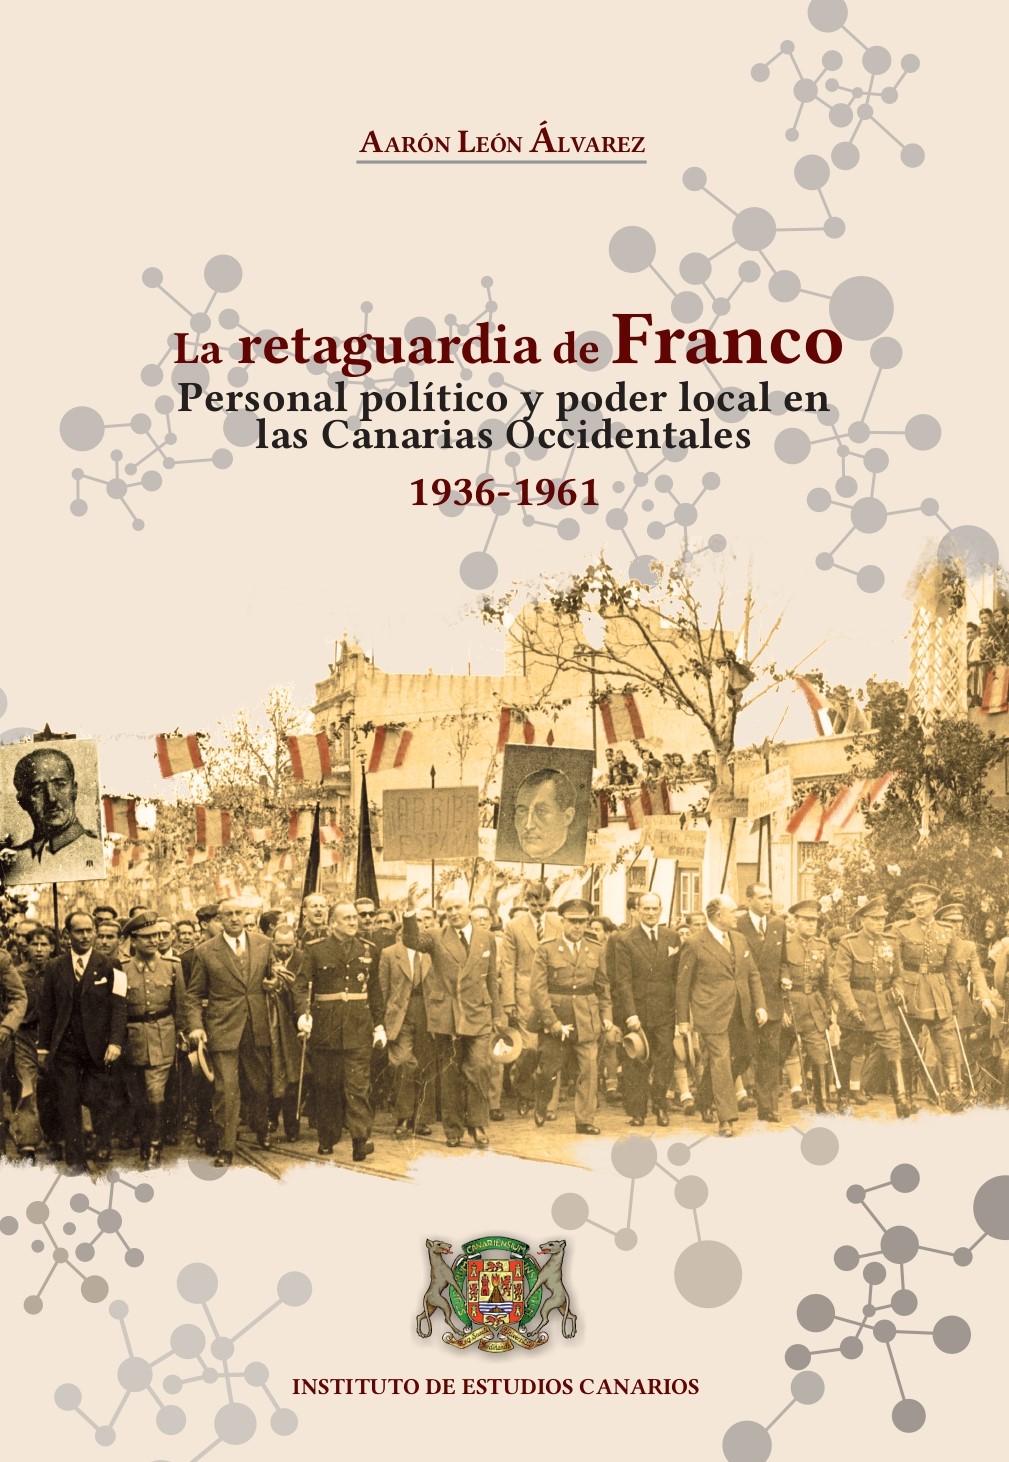 Imagen de portada del libro La retaguardia de Franco